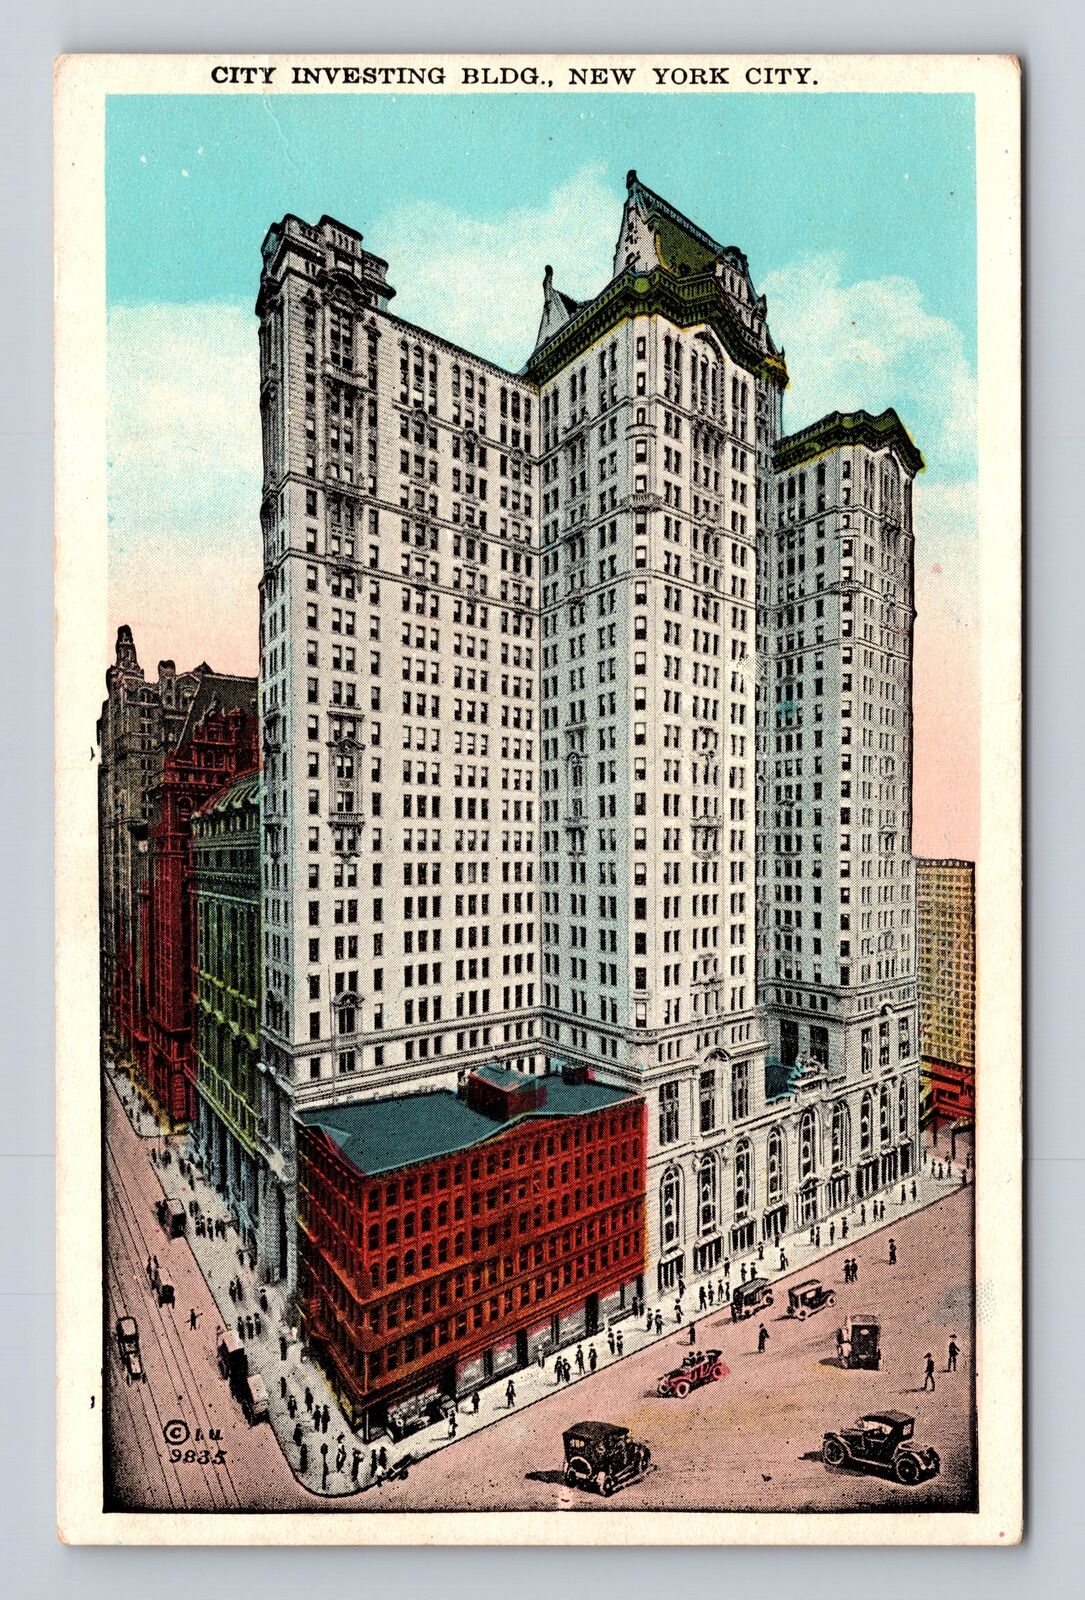 New York City NY, City Investing Building, Antique Vintage Souvenir Postcard